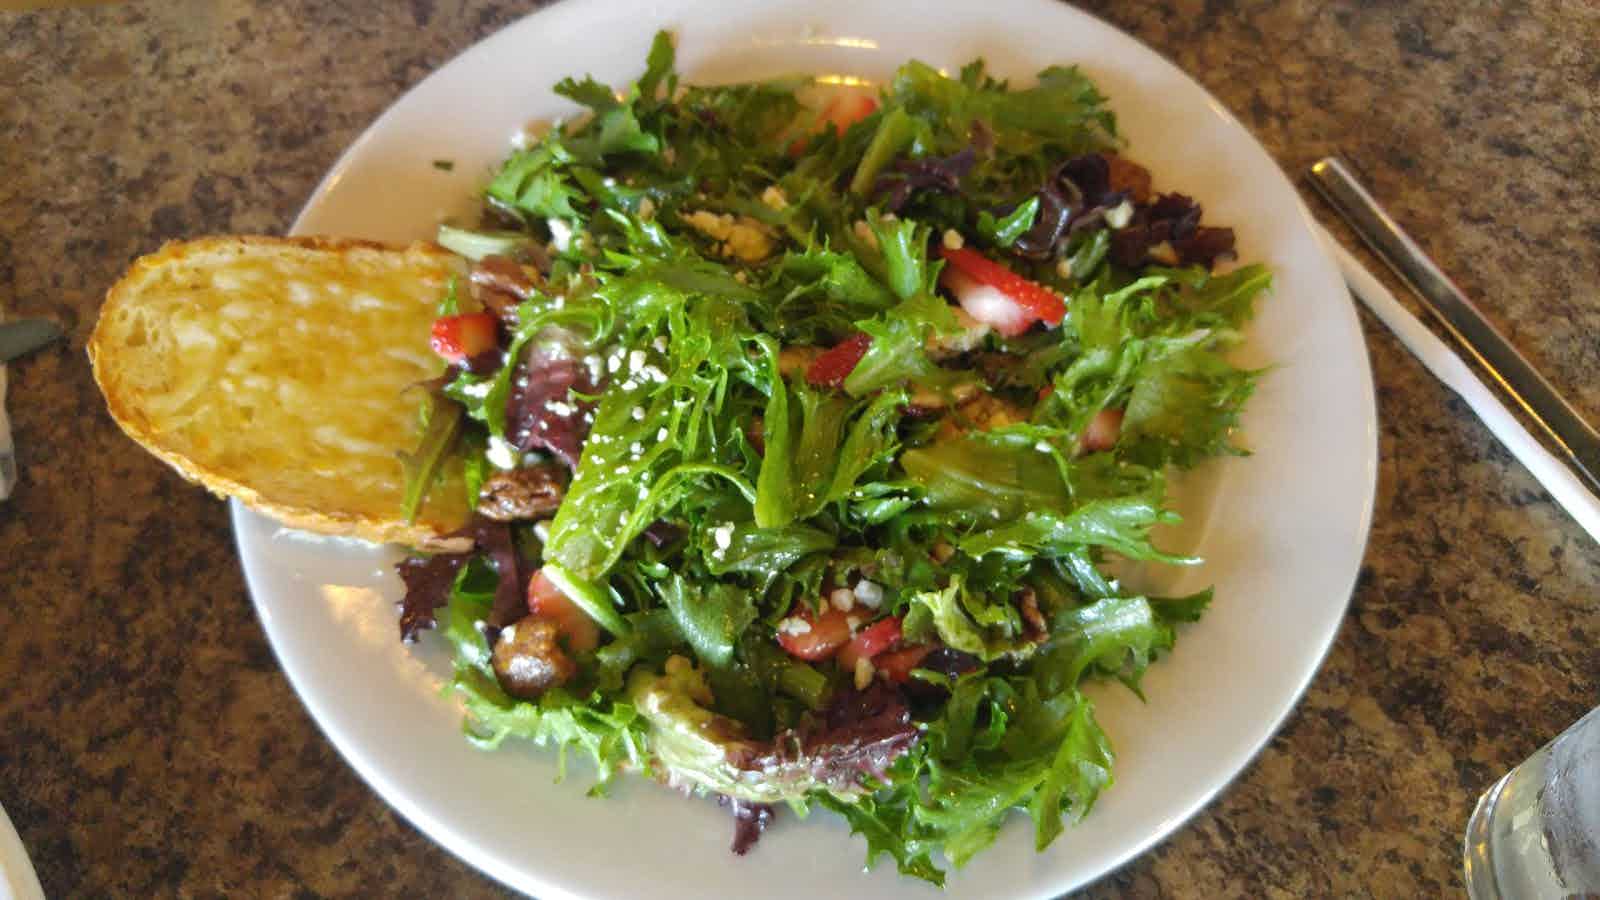 Chopped Veggie Salad